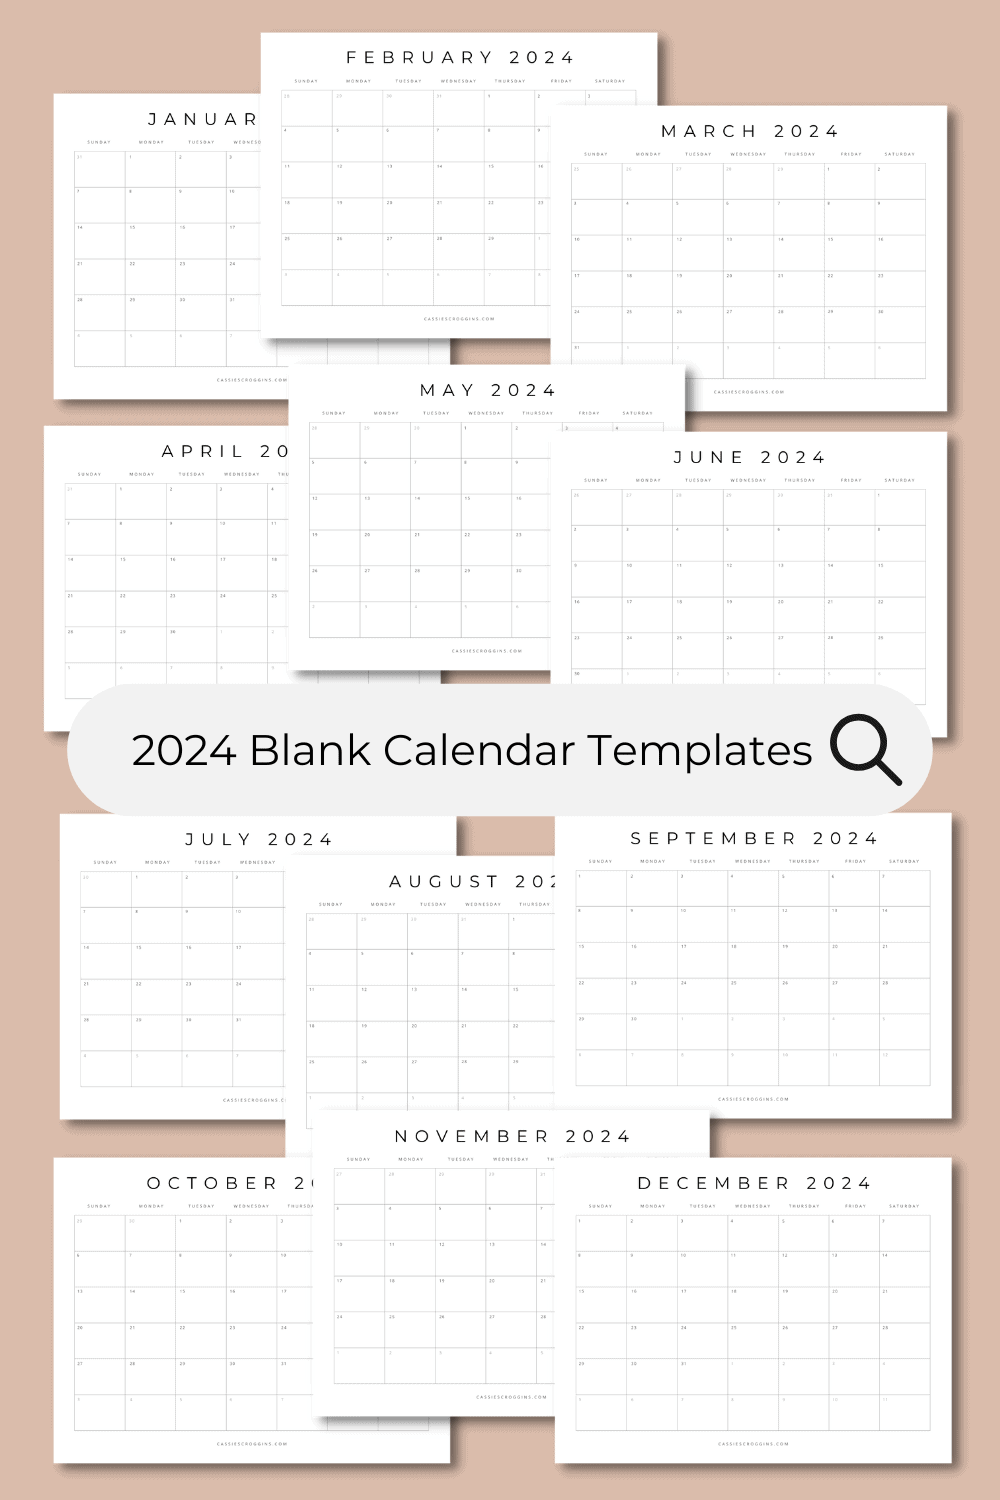 Free Printable 2024 Blank Calendar Templates (All 12 Months) regarding Free Printable Calendar 2024 That I Can Edit